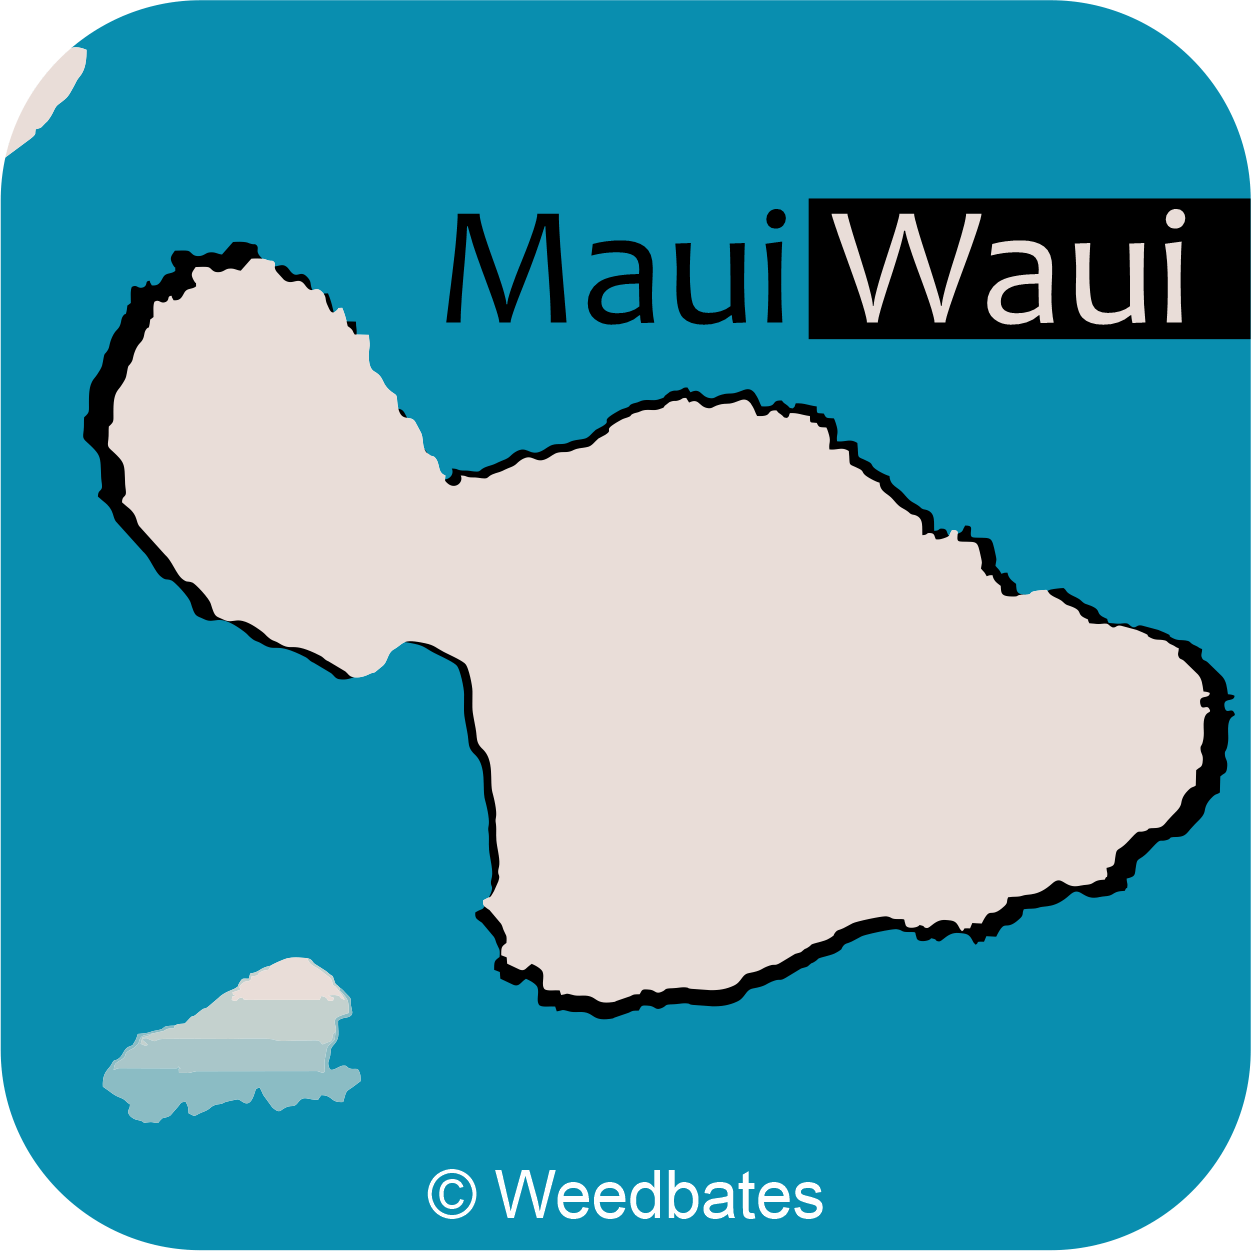 growing Maui Waui weed